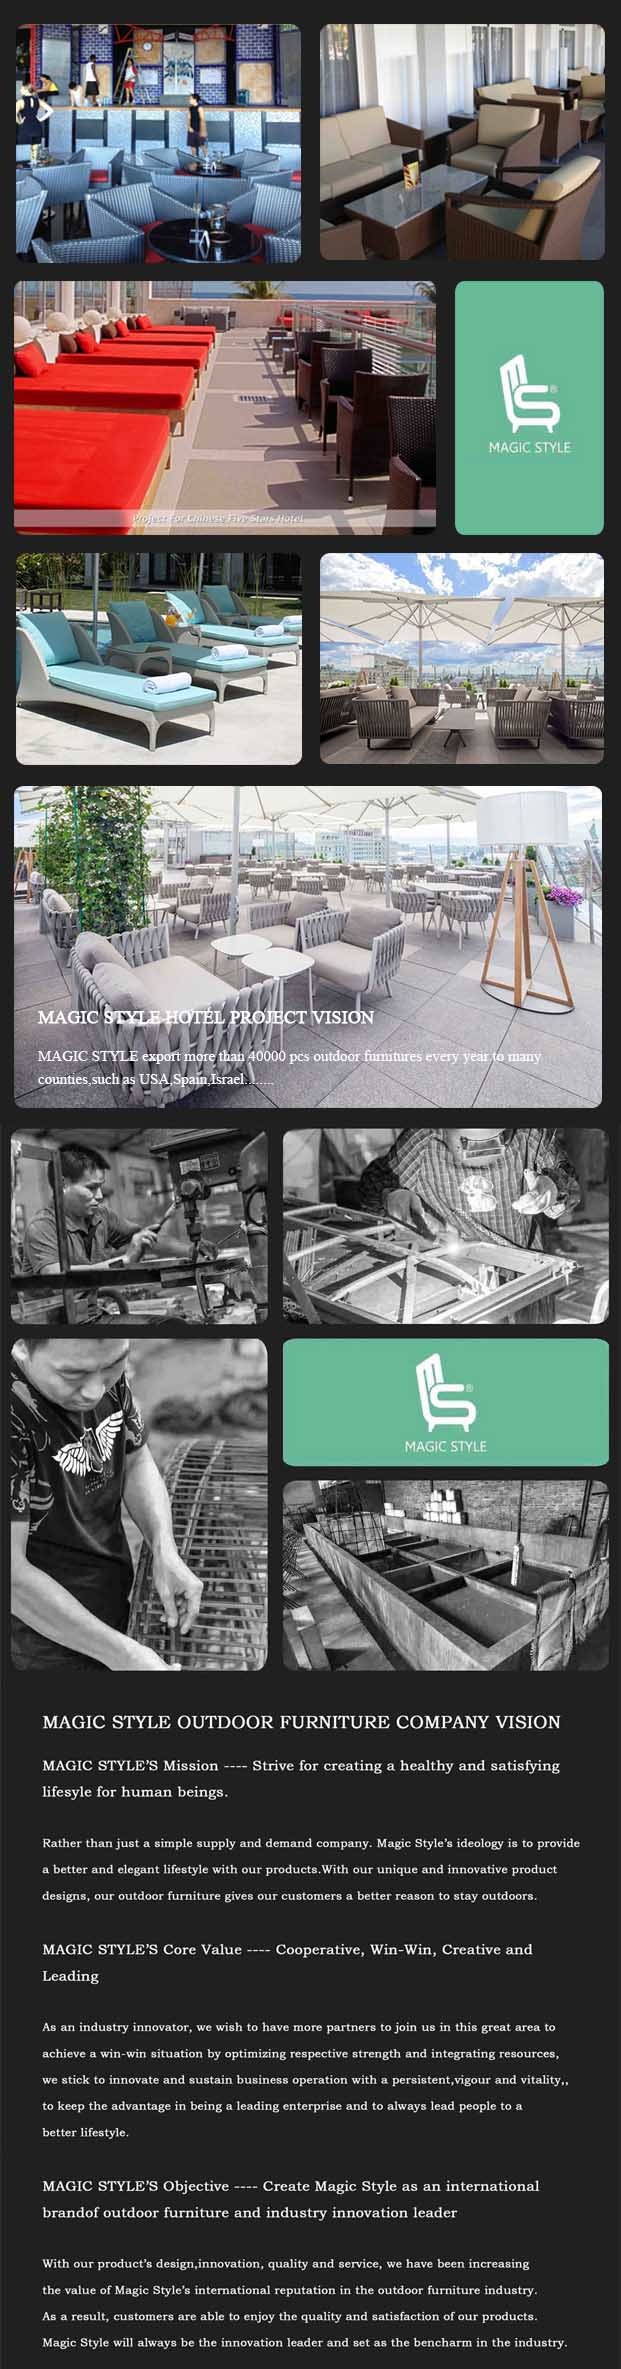 Nes Design Sling Sunlounger Textile Sunbed Sling Daybed Garden Furniture (Magic Style) Foshan